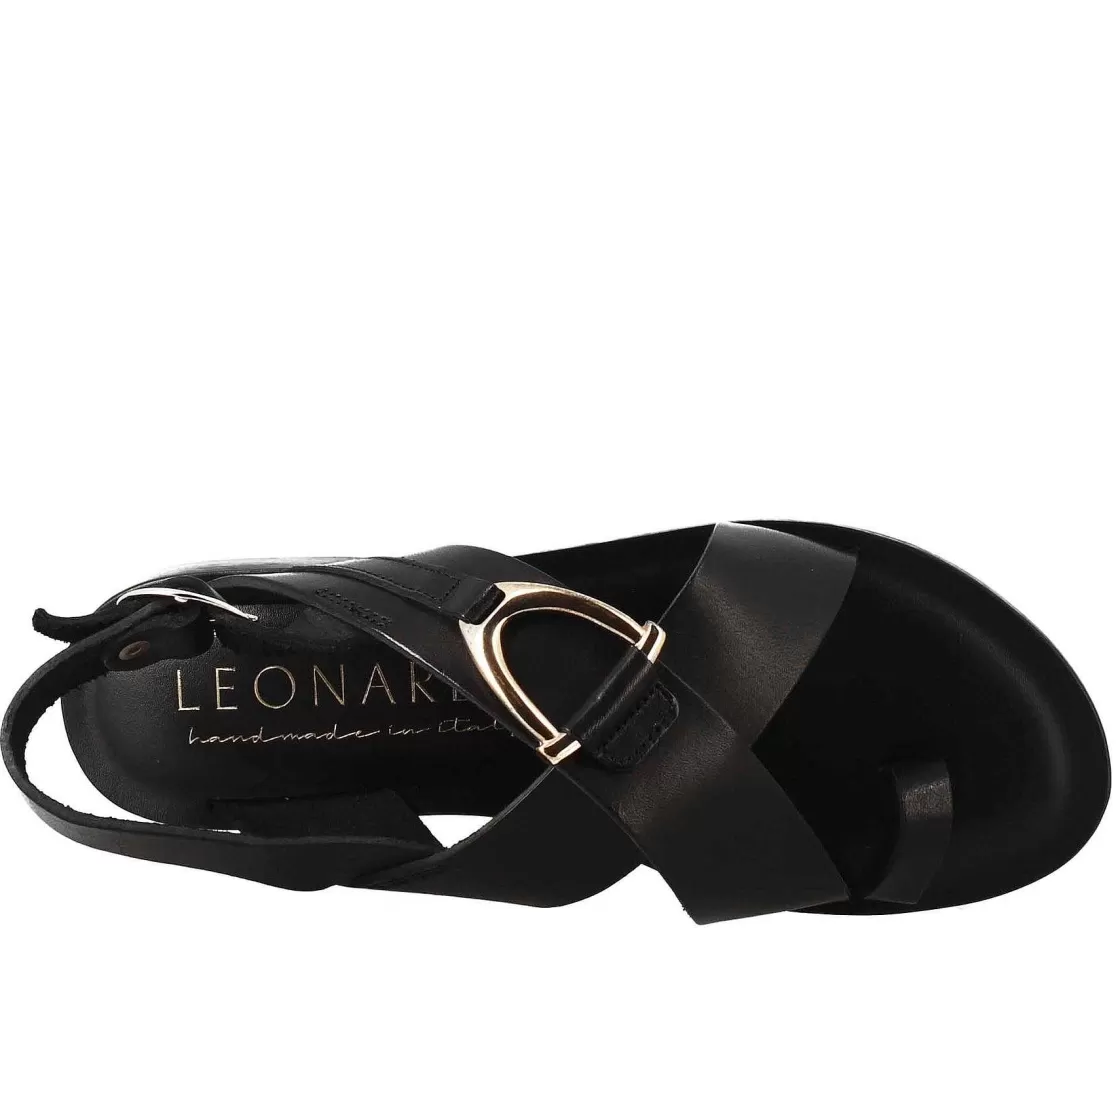 Leonardo Women'S Thong Sandals In Black Leather Outlet